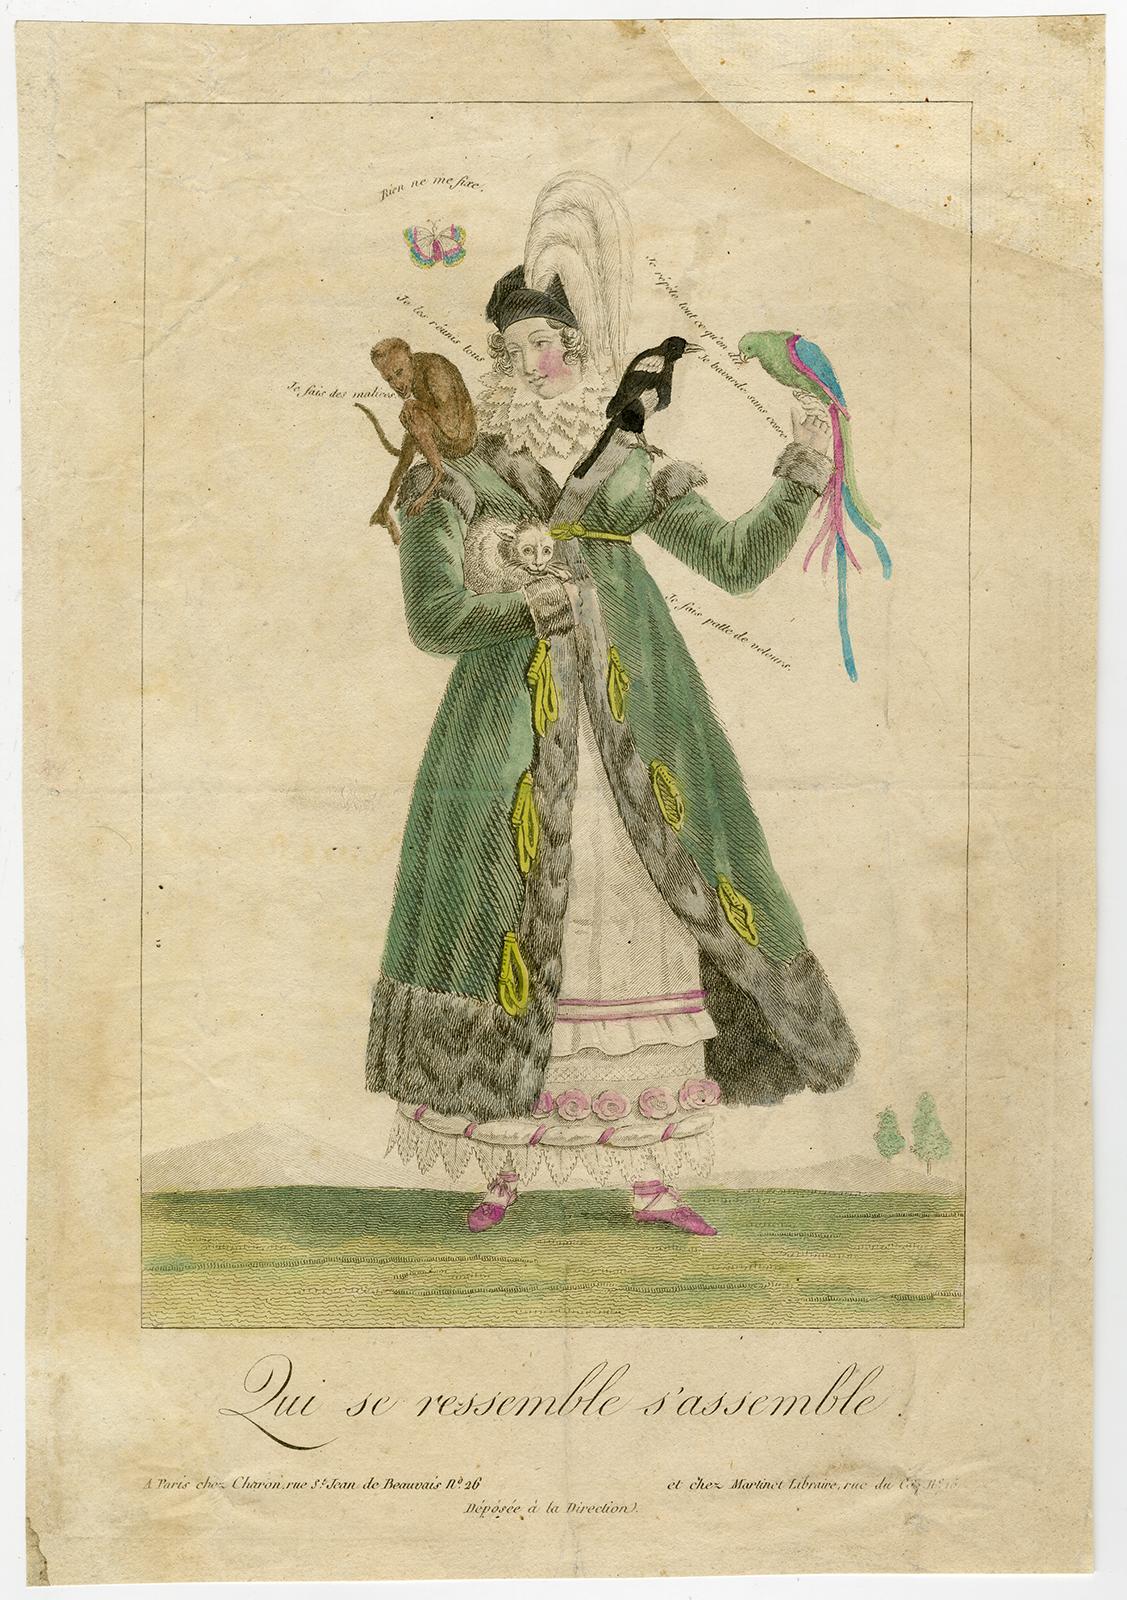 Louis Francois Charon Portrait Print - Traits in the woman - parrot by Louis-Francois Charon - Engraving - 19th Century